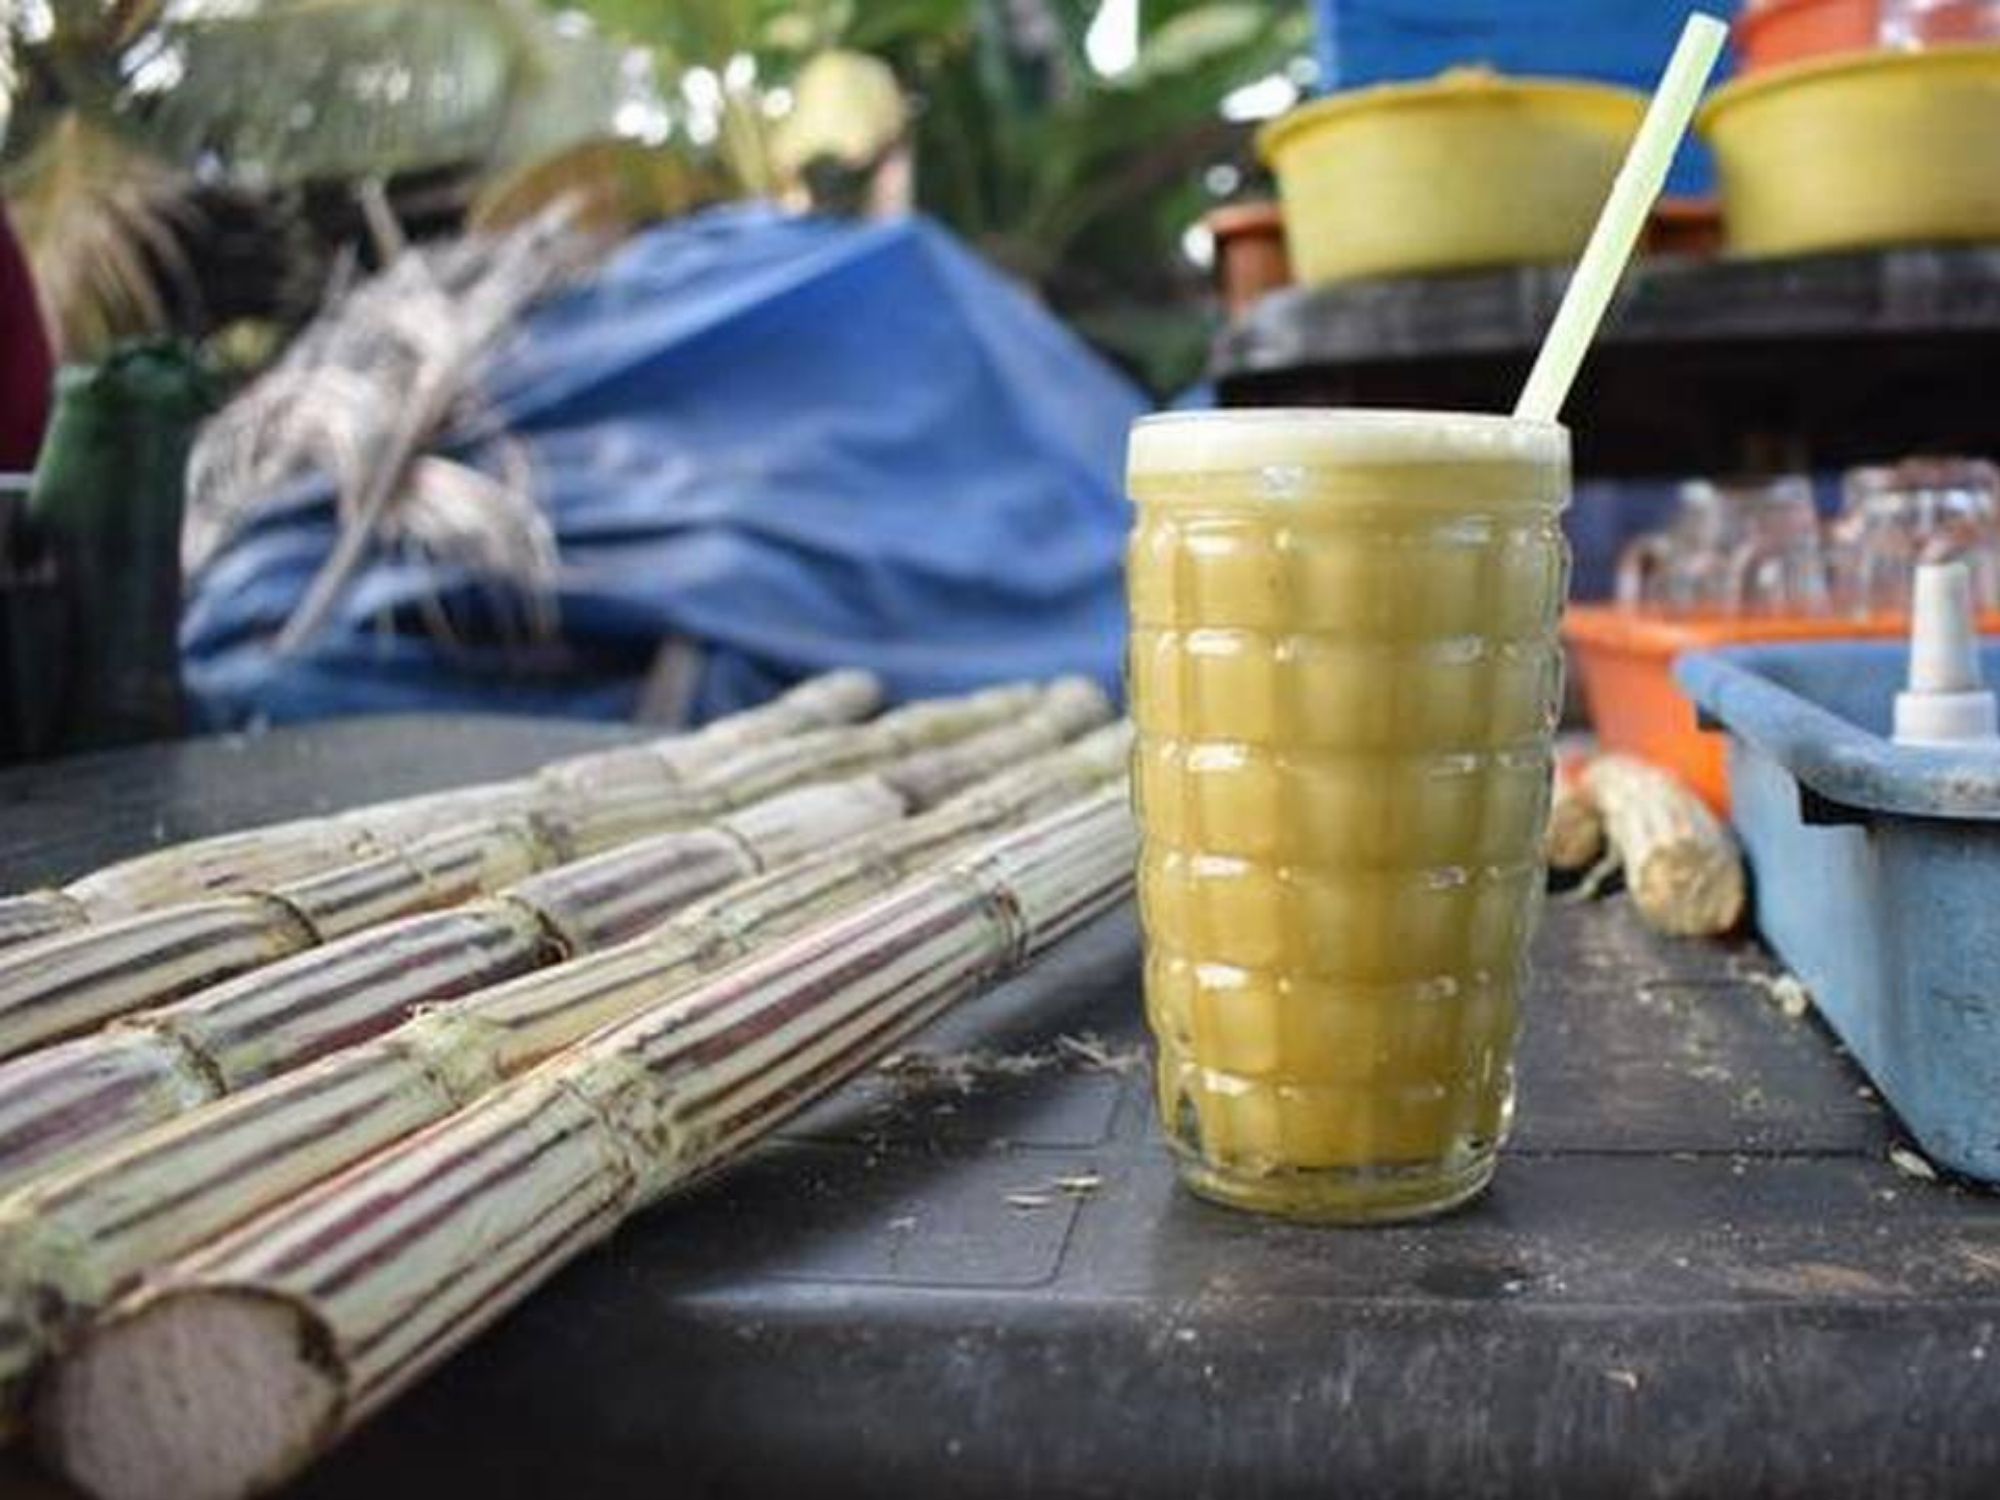 4 health benefits of sugarcane juice